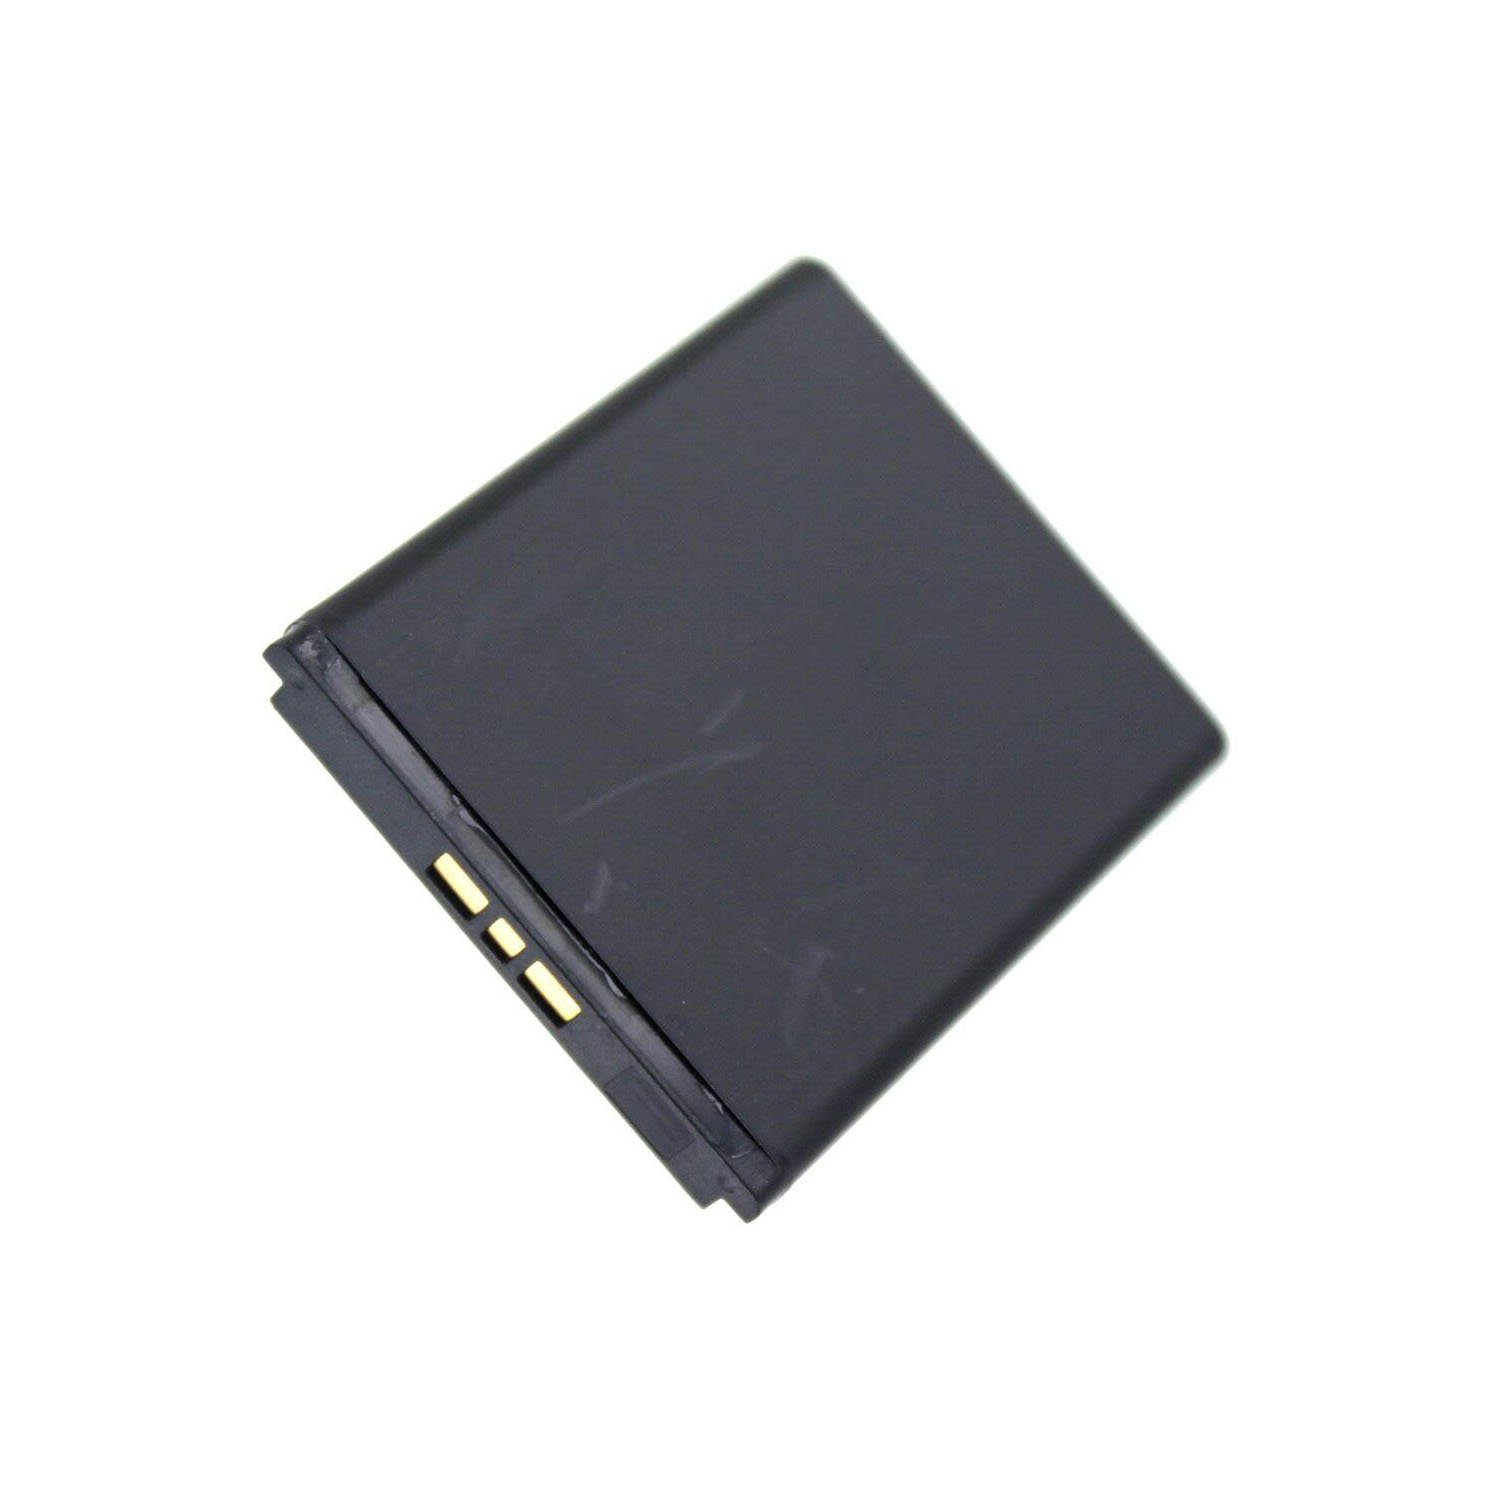 AGI Akku kompatibel mit Sony Ericsson W610I Akku Akku